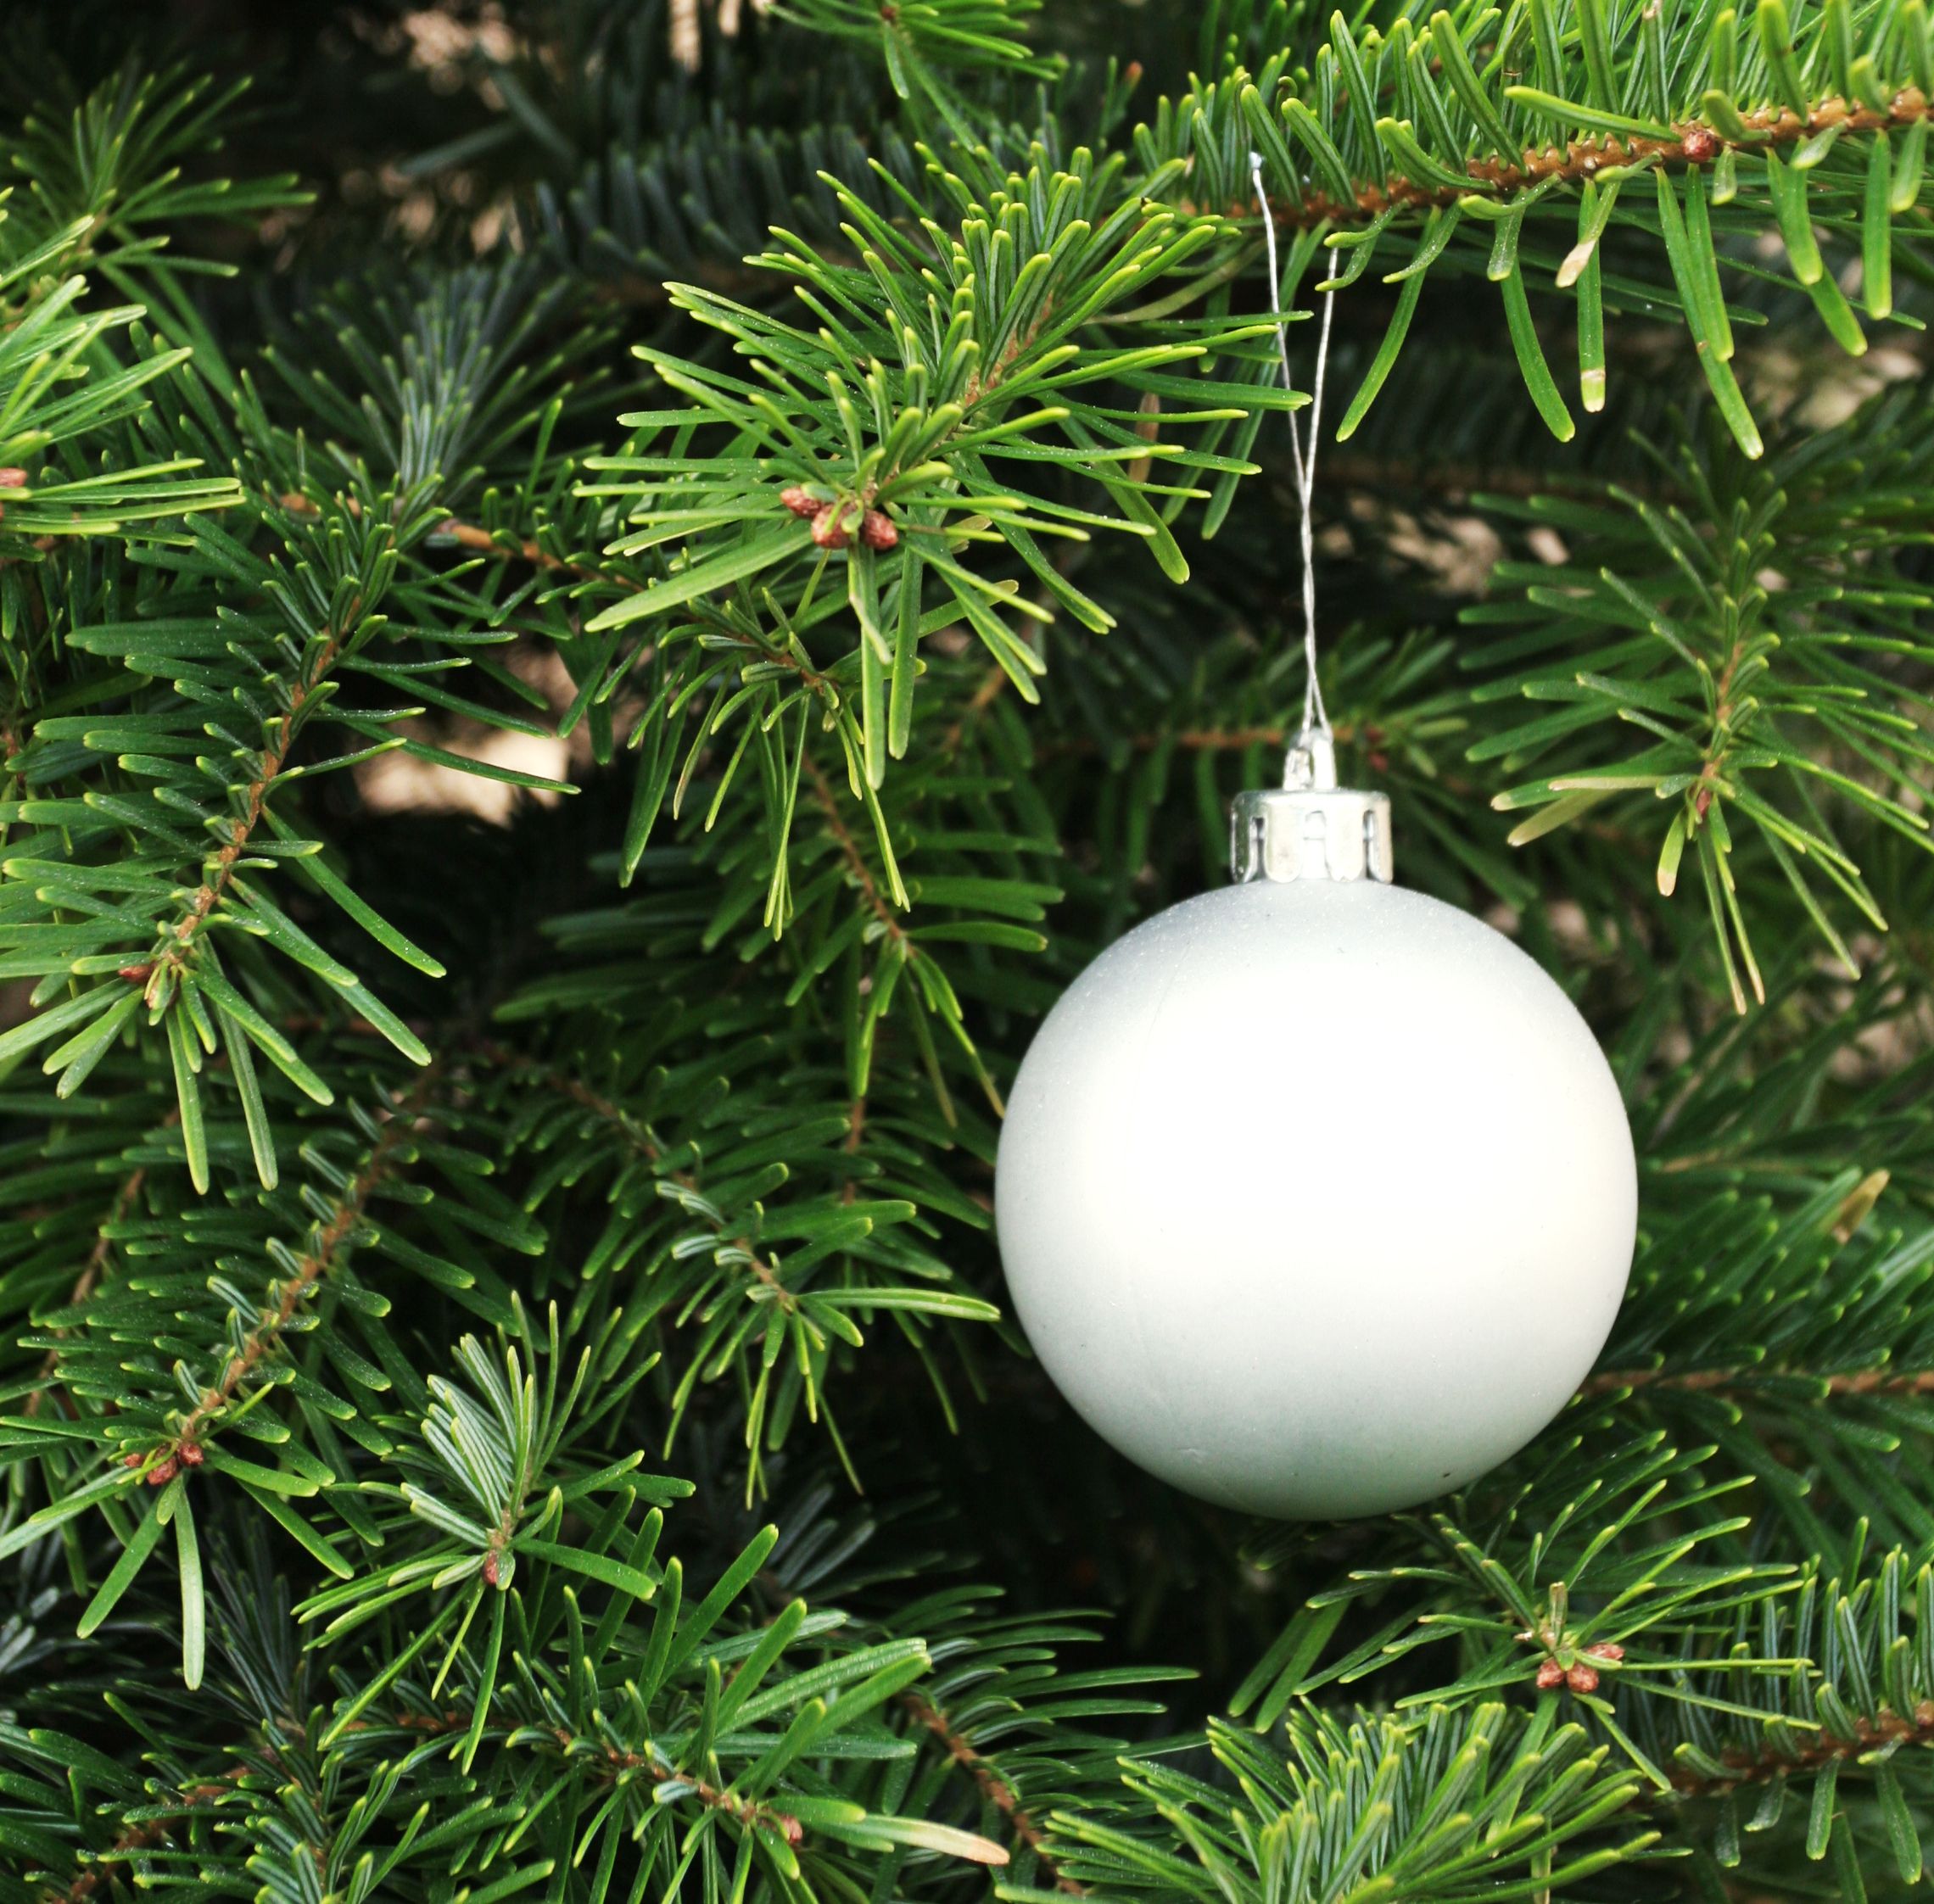 An ornament hangs on a Christmas tree.